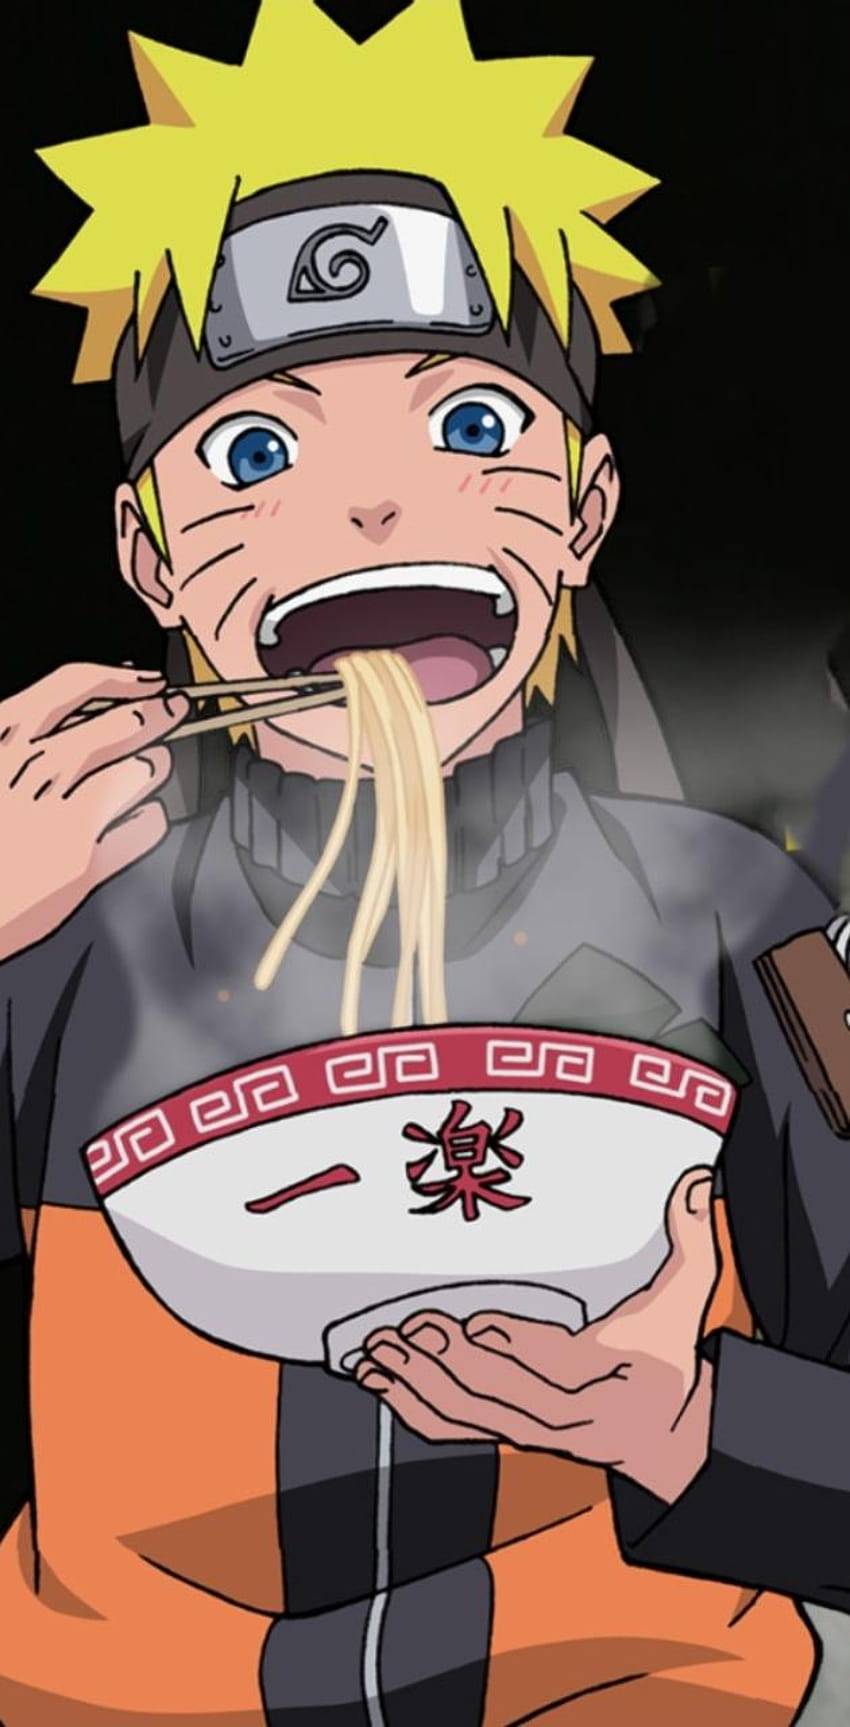 Naruto Anime Naruto Eating Ramen Image Refrigerator Magnet NEW UNUSED | eBay